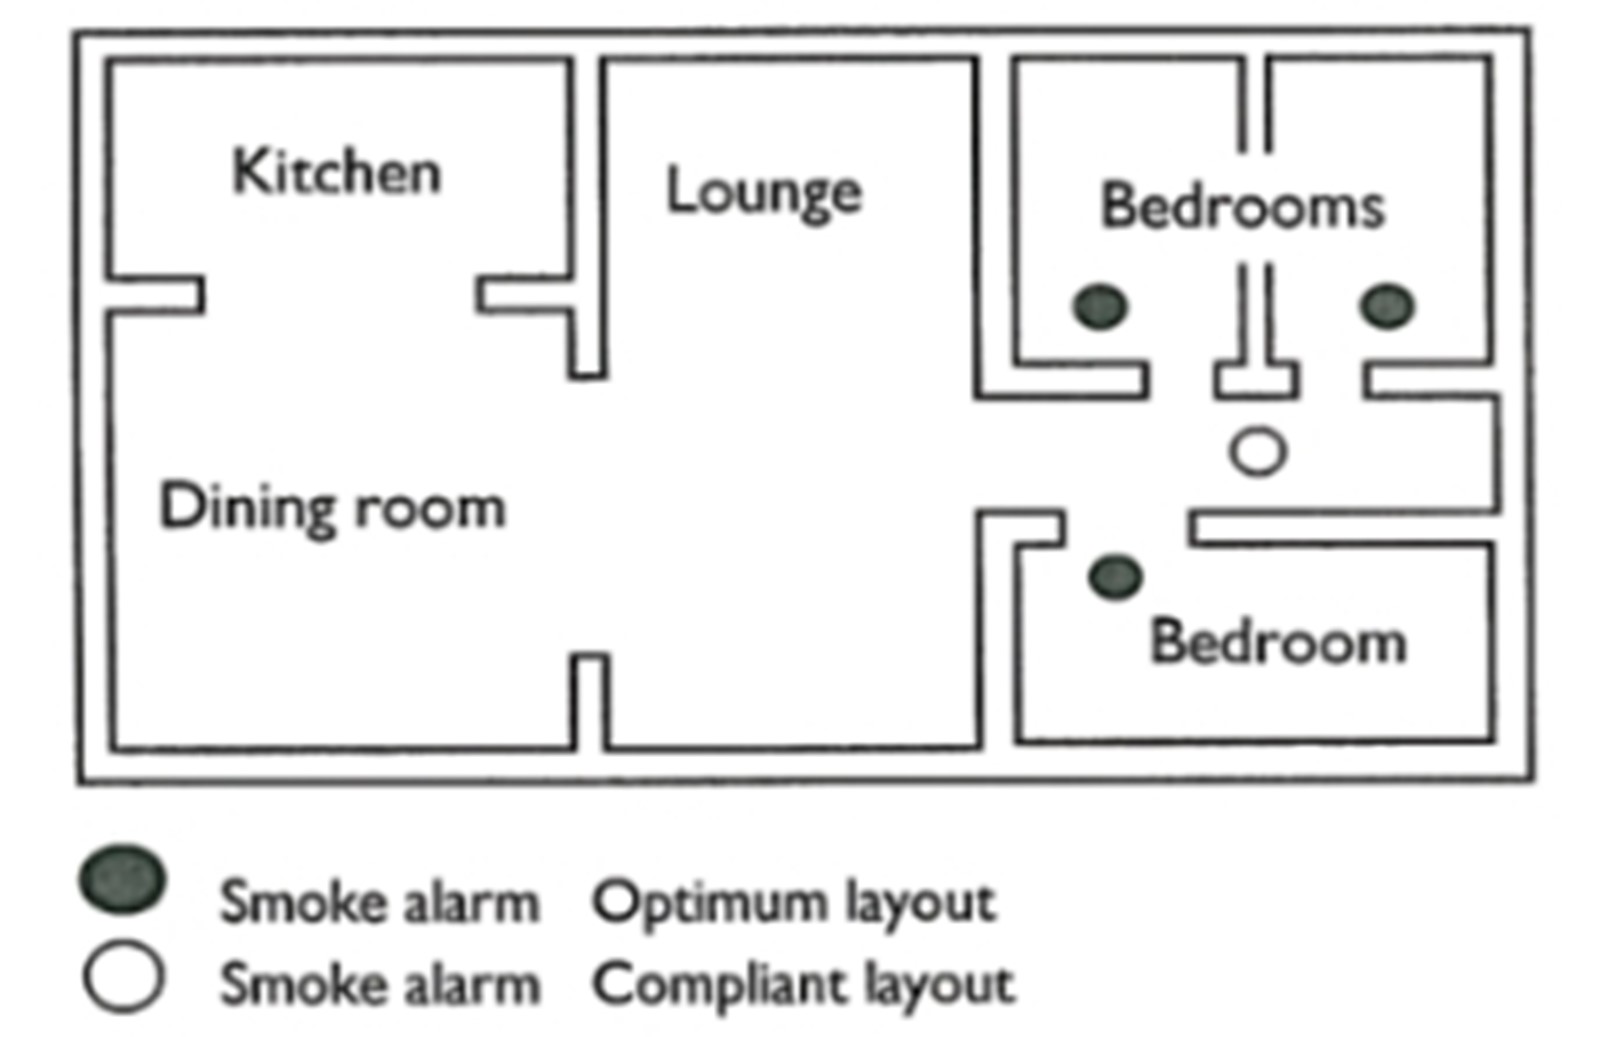 Smoke alarm layout